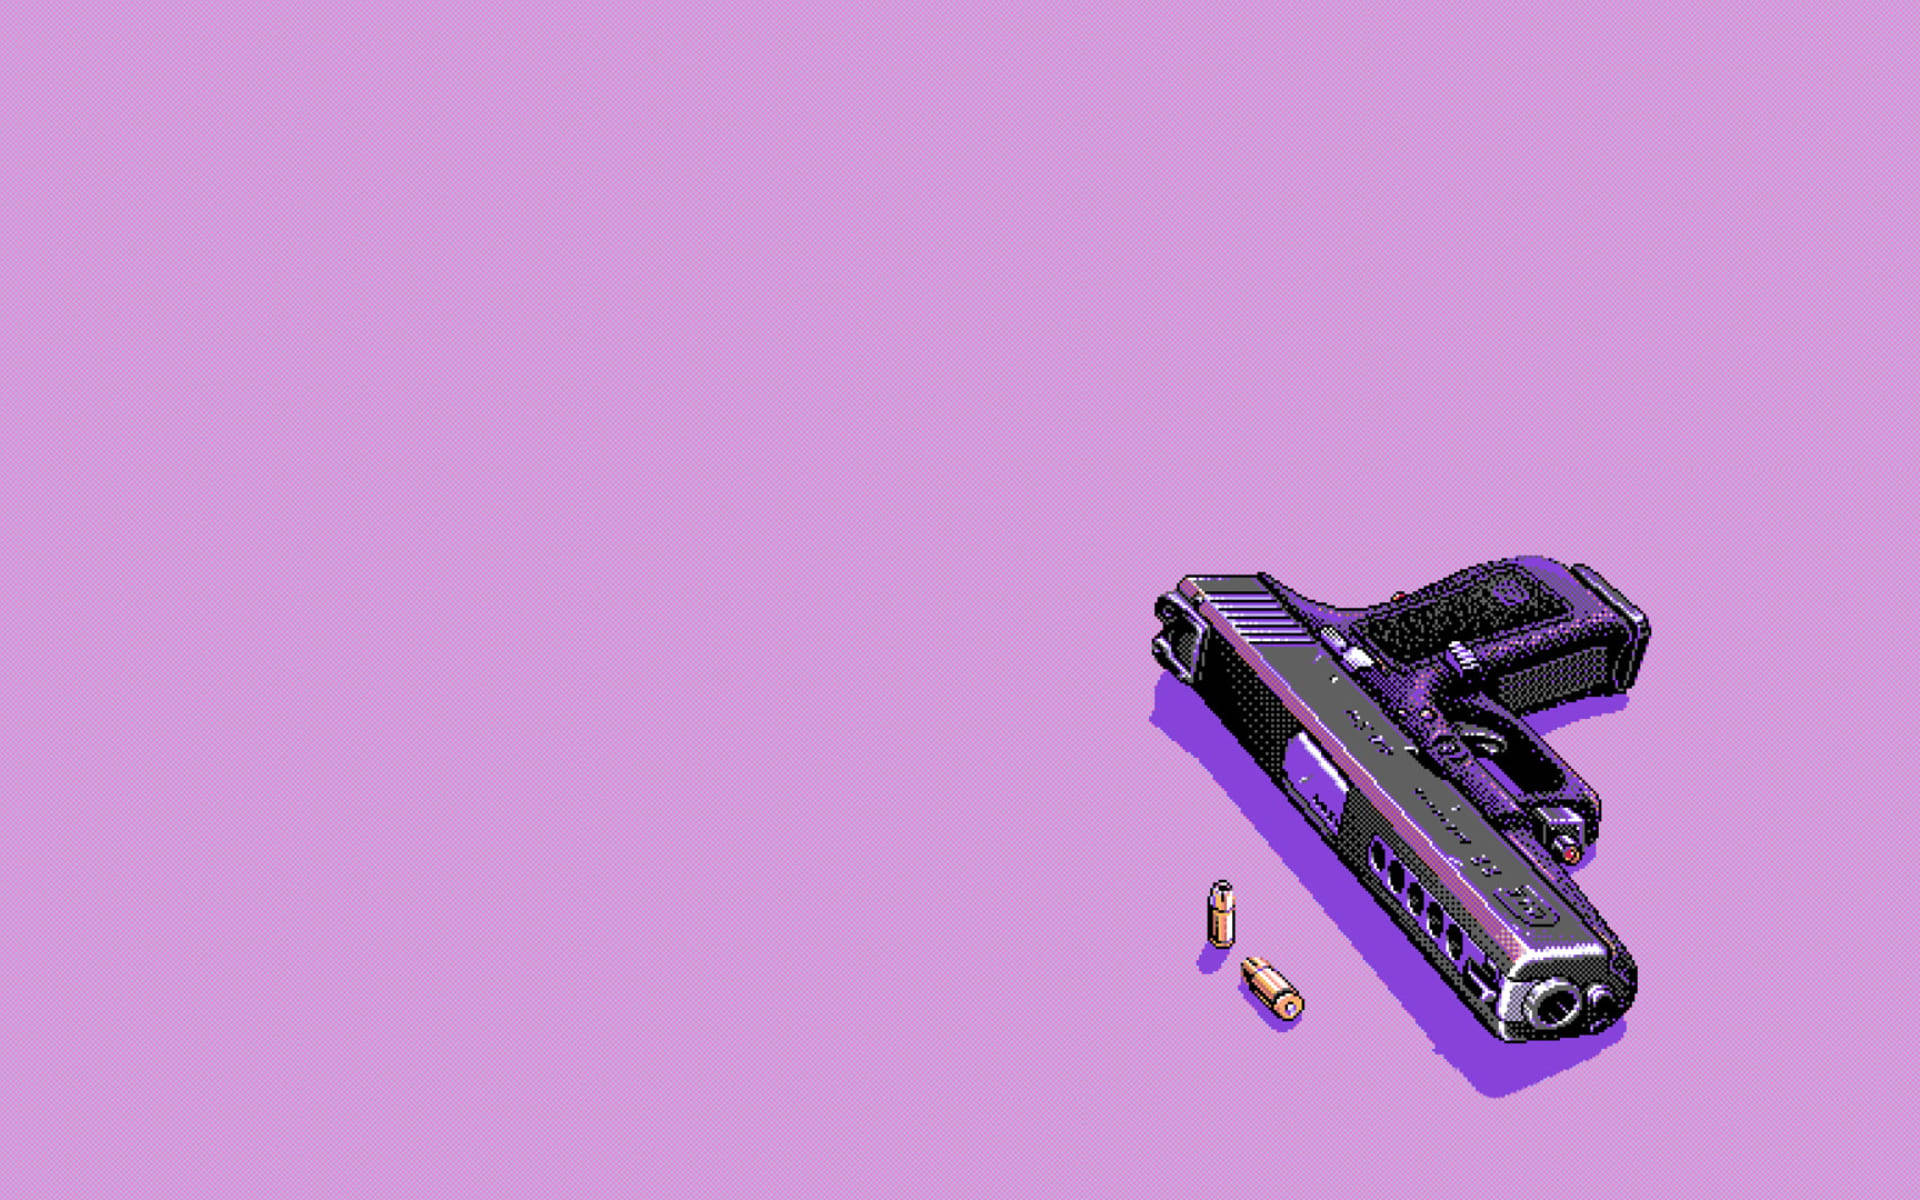 Retro 8-Bit Glock Pistol Wallpaper